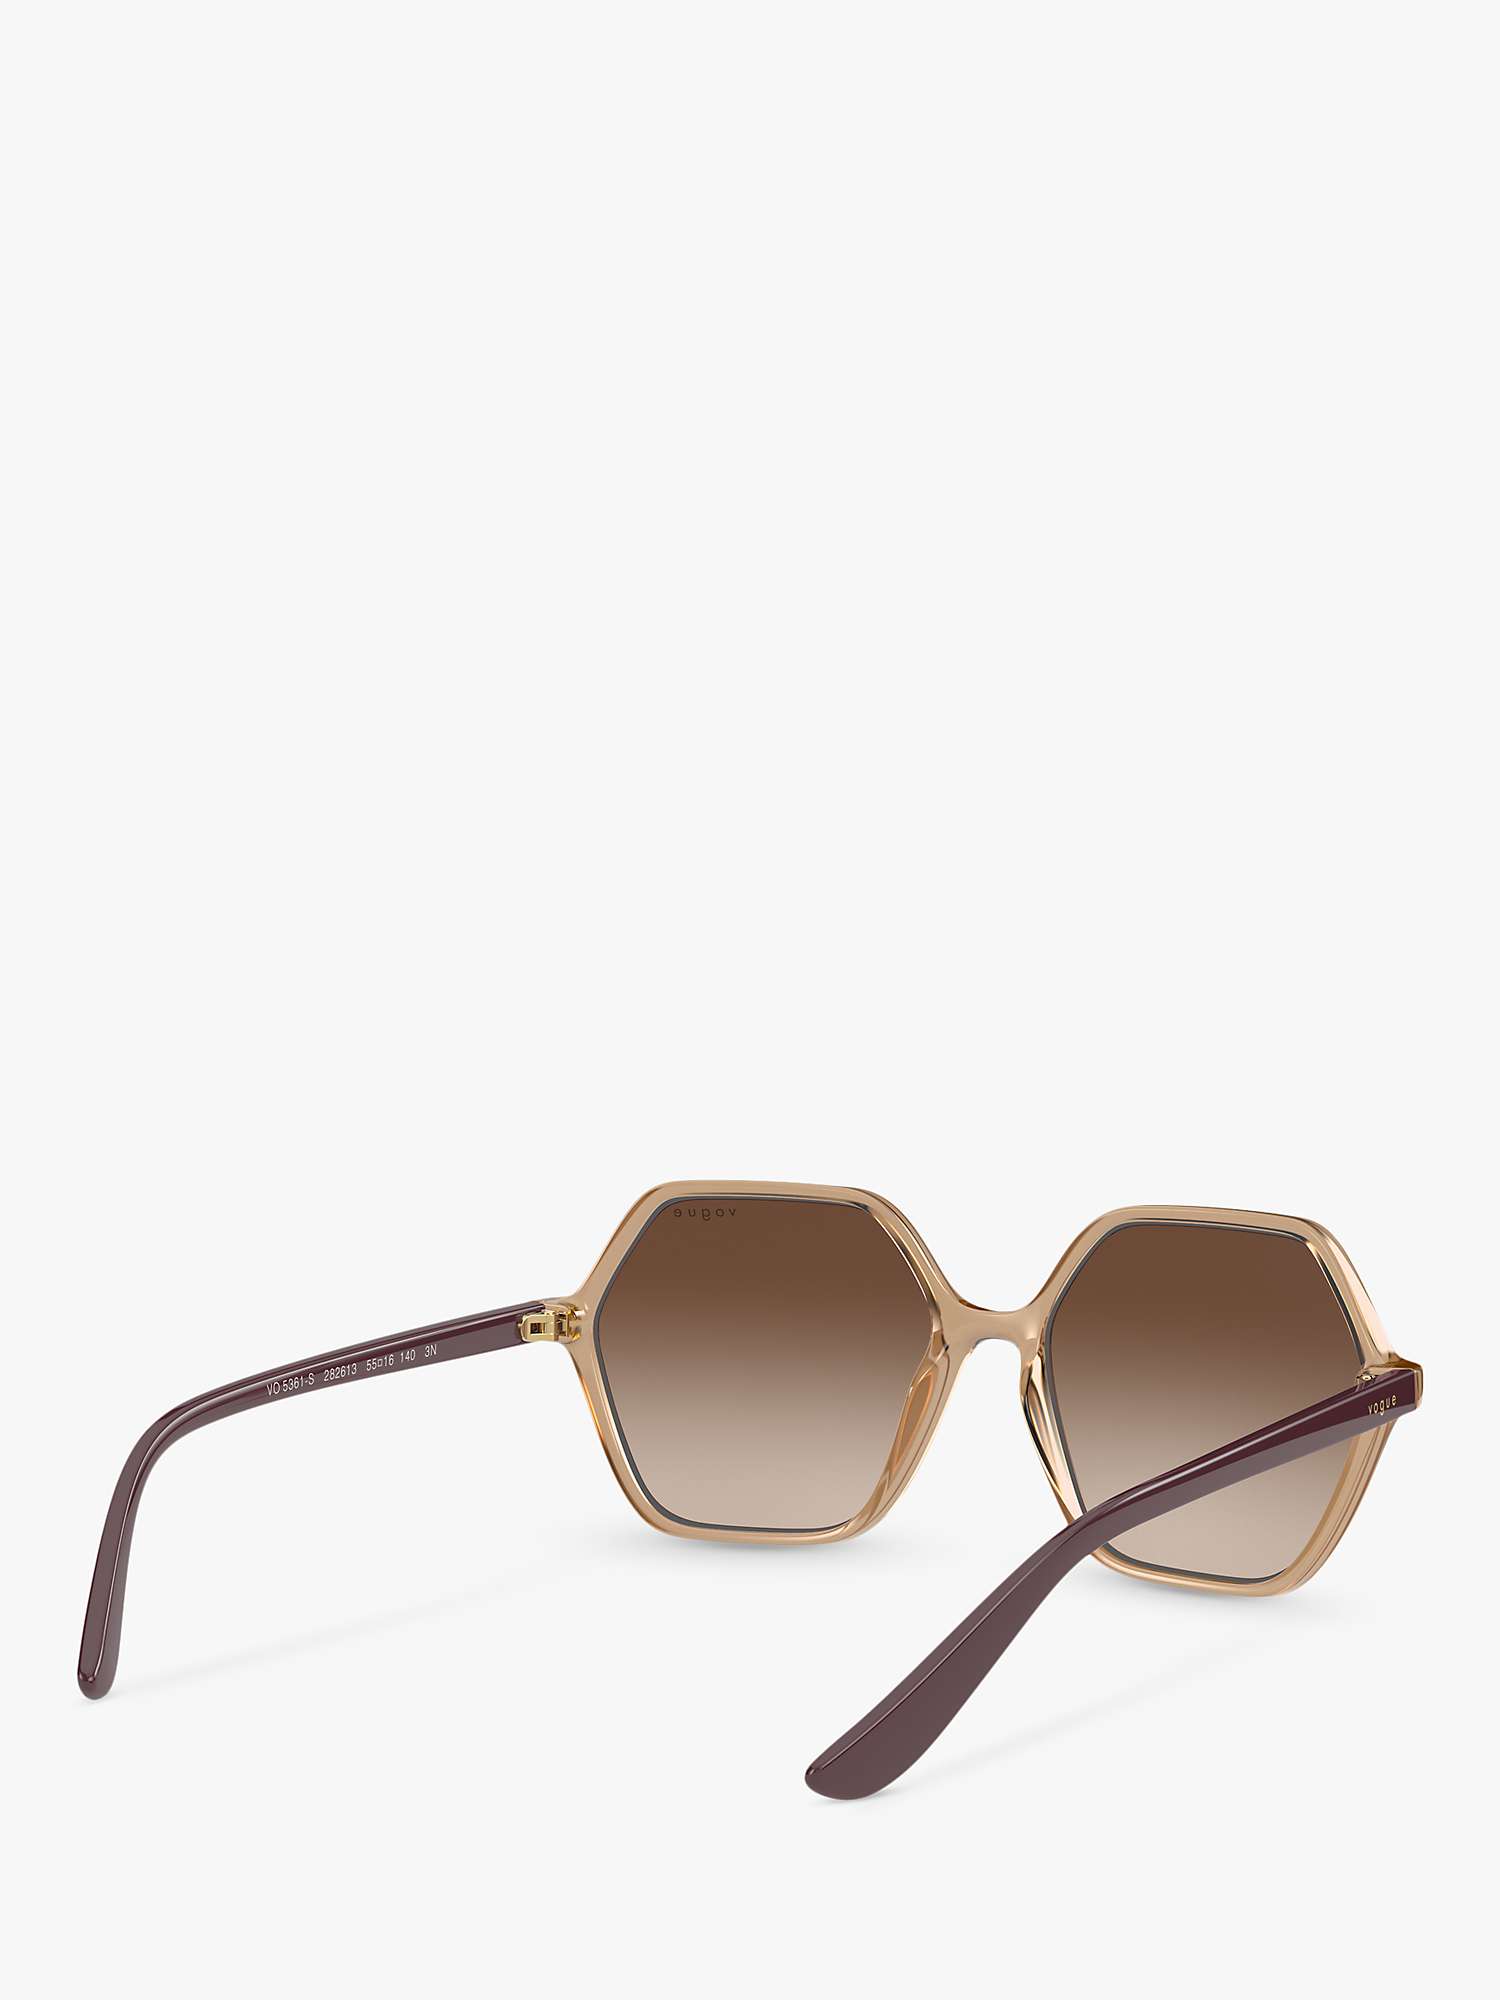 Buy Vogue VO5361S Women's Irregular Sunglasses, Transparent Caramel/Brown Gradient Online at johnlewis.com